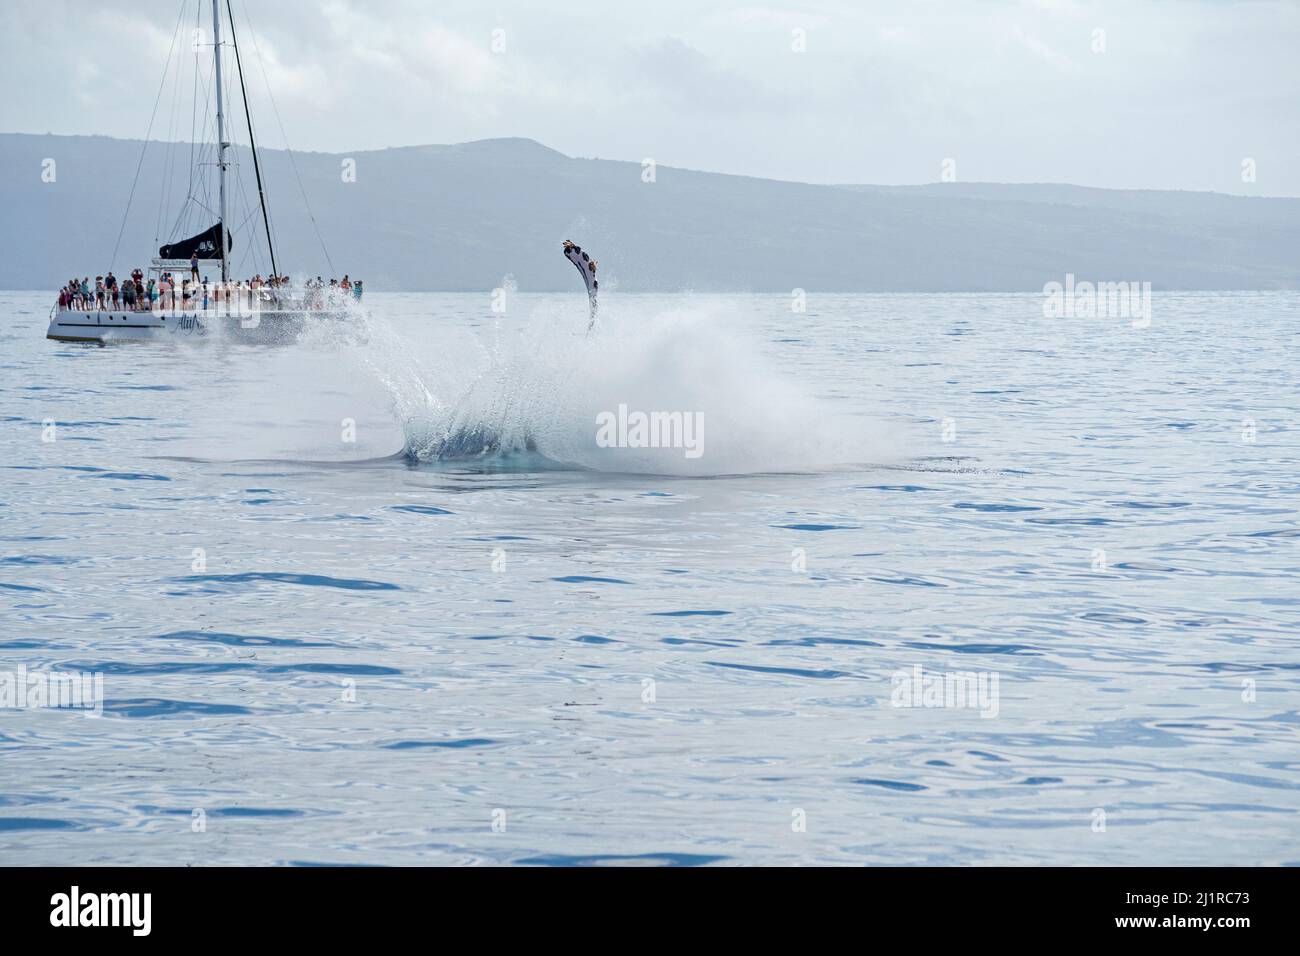 Maui, HI/USA - February 18, 2022: Tourists aboard whale watching boat observe humpback whale as it lobtails in pacific ocean off maui coast Stock Photo